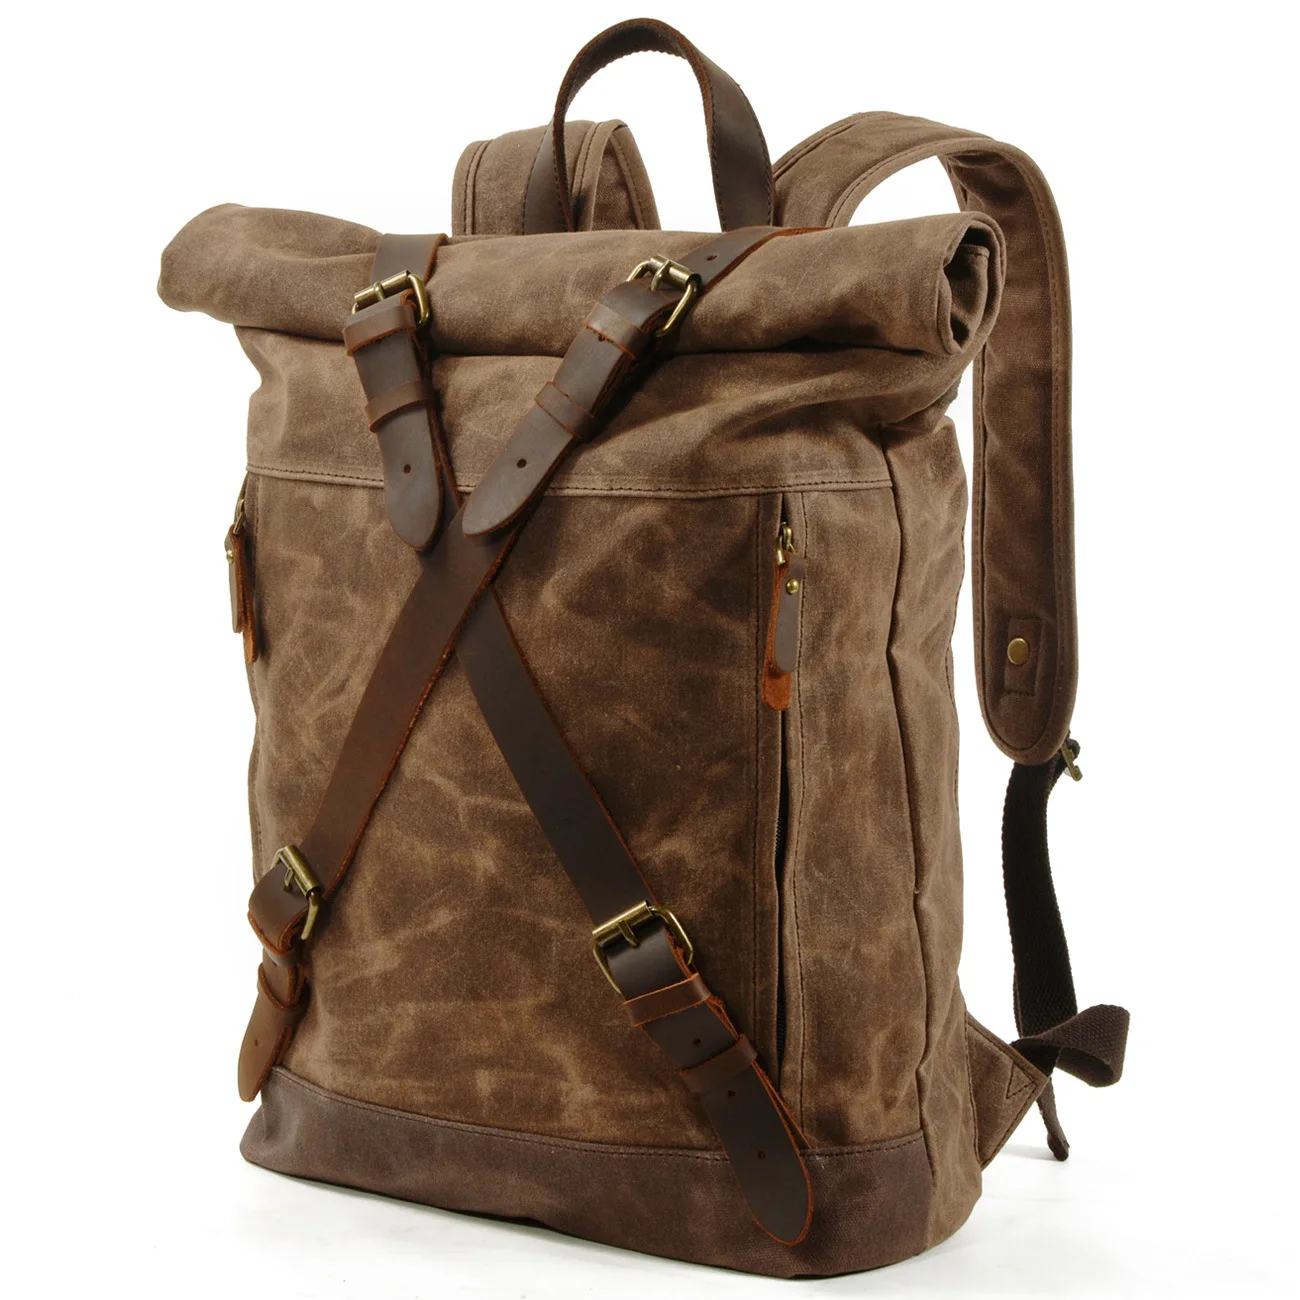 American Outdoor Backpack Travel Bag Anti-theft Computer Backpack Waterproof School Bag Mountaineering Bag Rucksack mochila등산용배낭